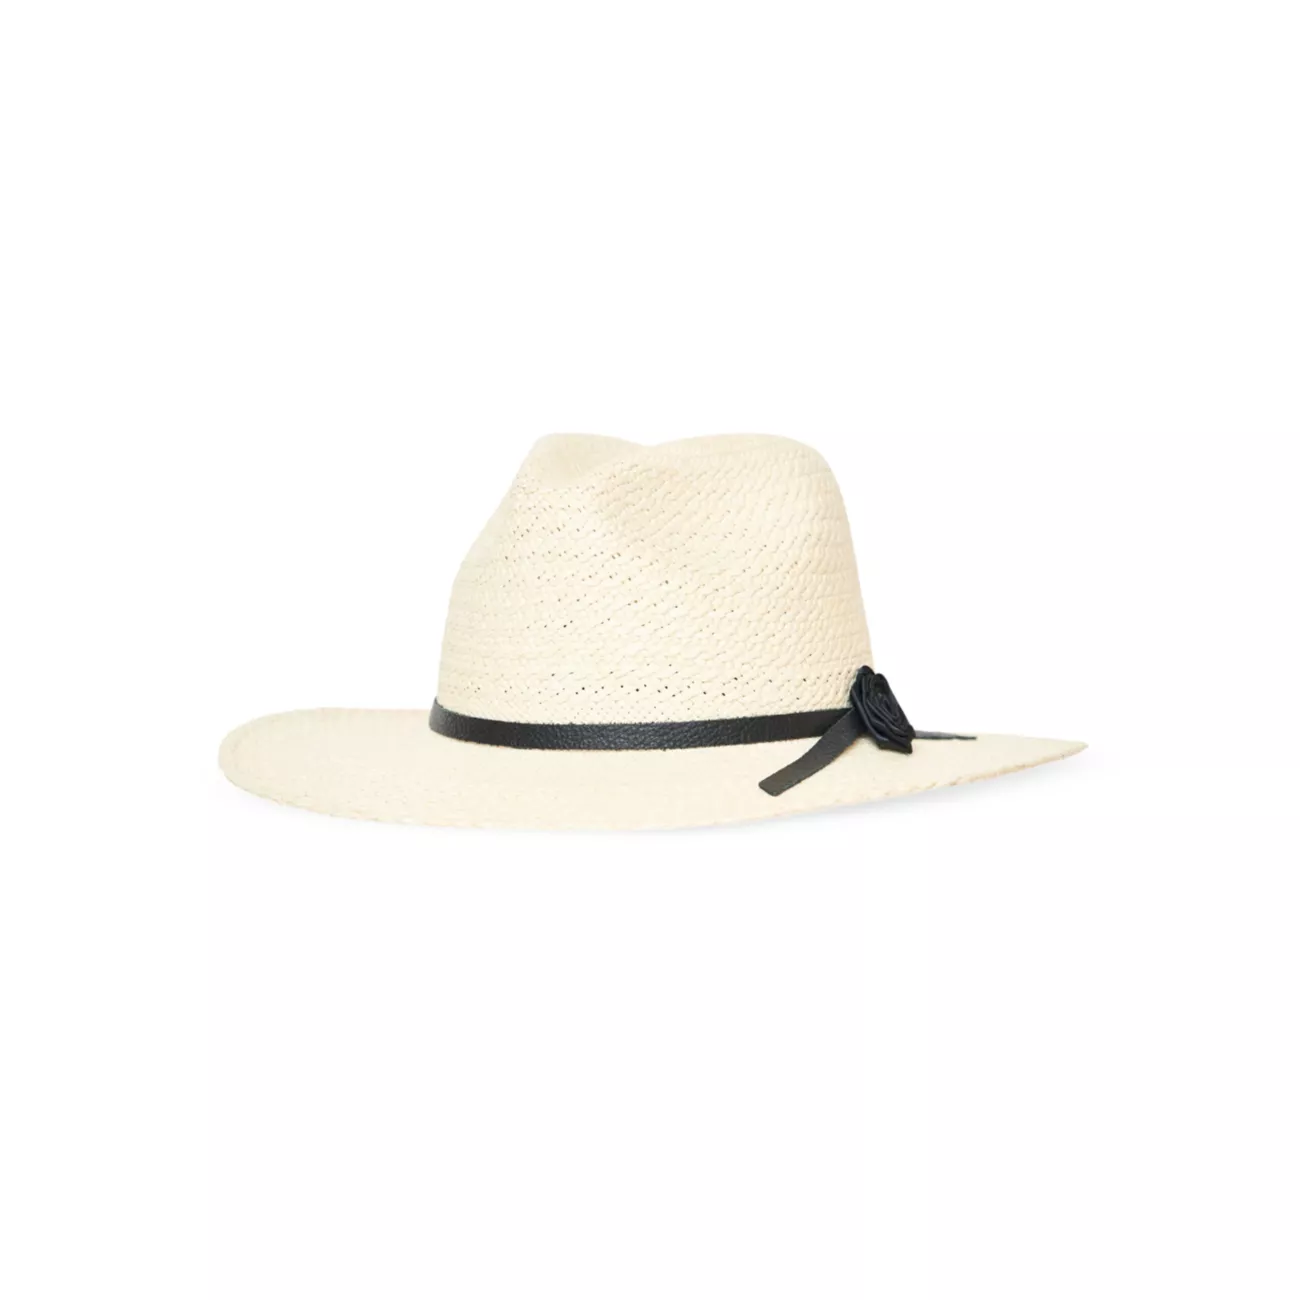 Rhode Leather-Trimmed Straw Hat FREYA